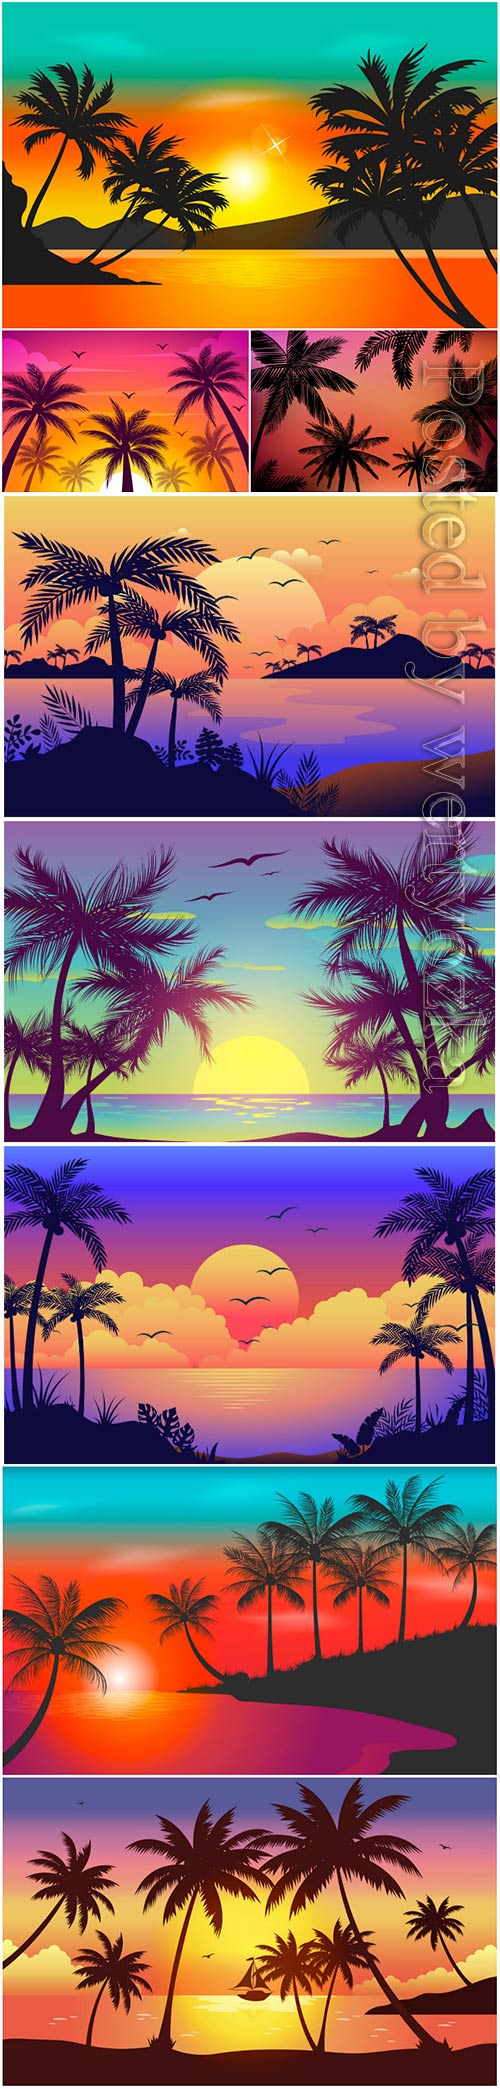 Colorful palm silhouettes wallpaper concept vector design